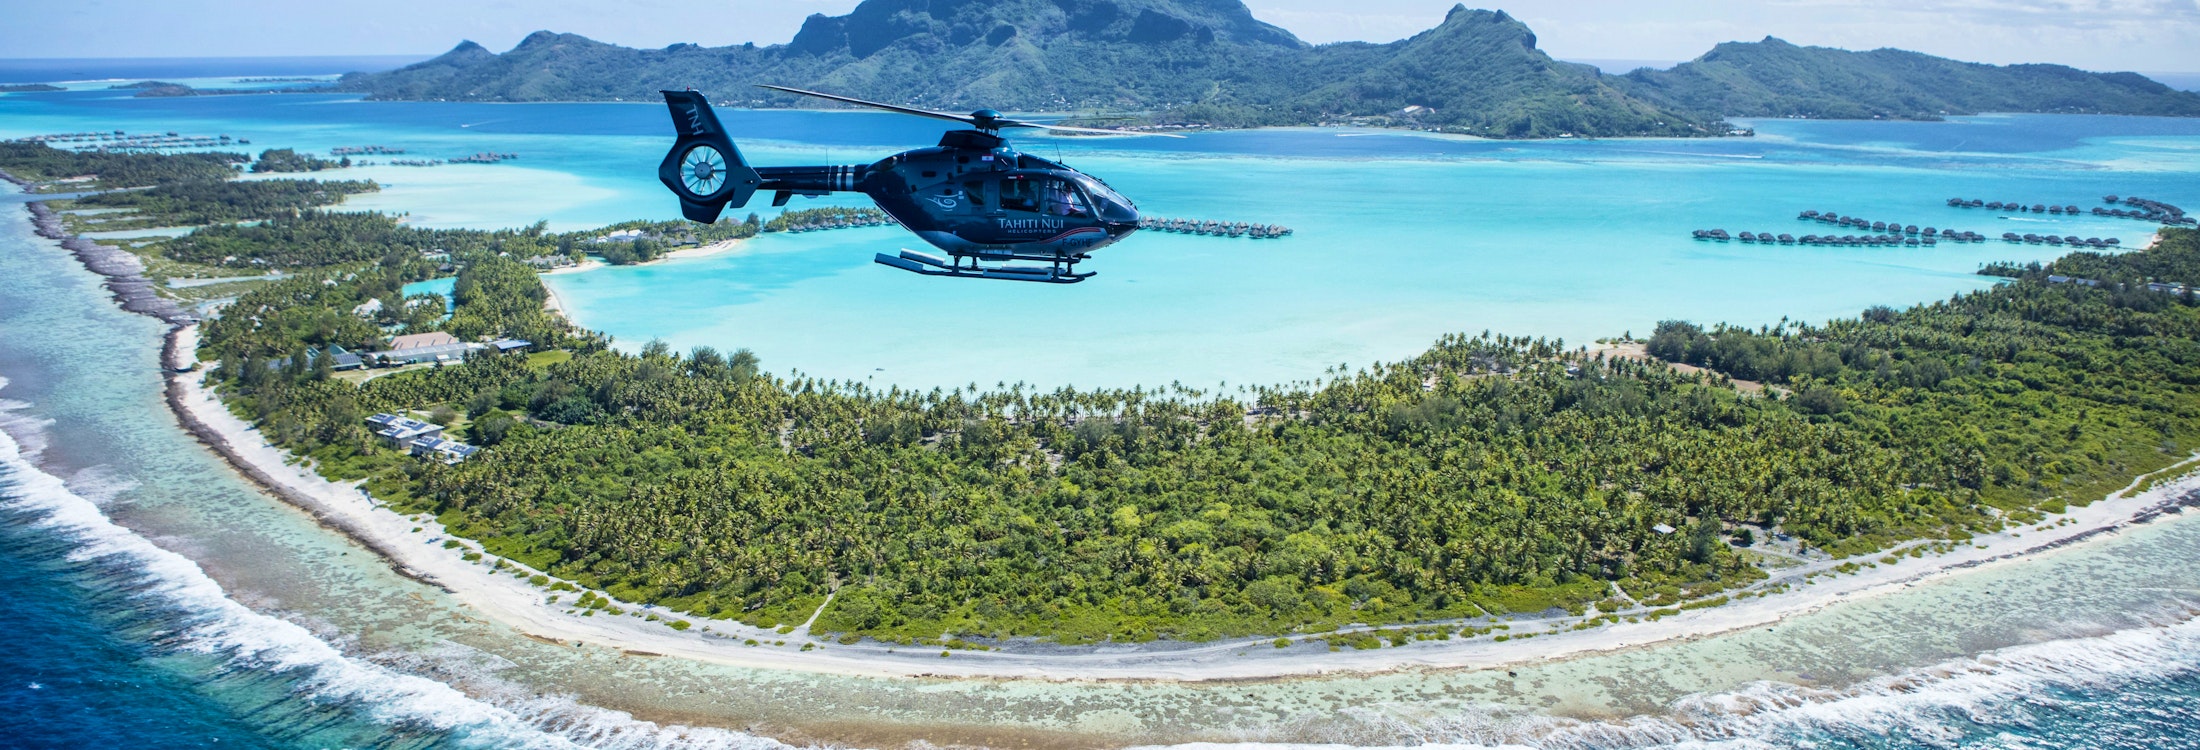 Bora Bora Scenic Helicopter Flights © Grégoire Le Bacon Tahiti Nui Helicopters